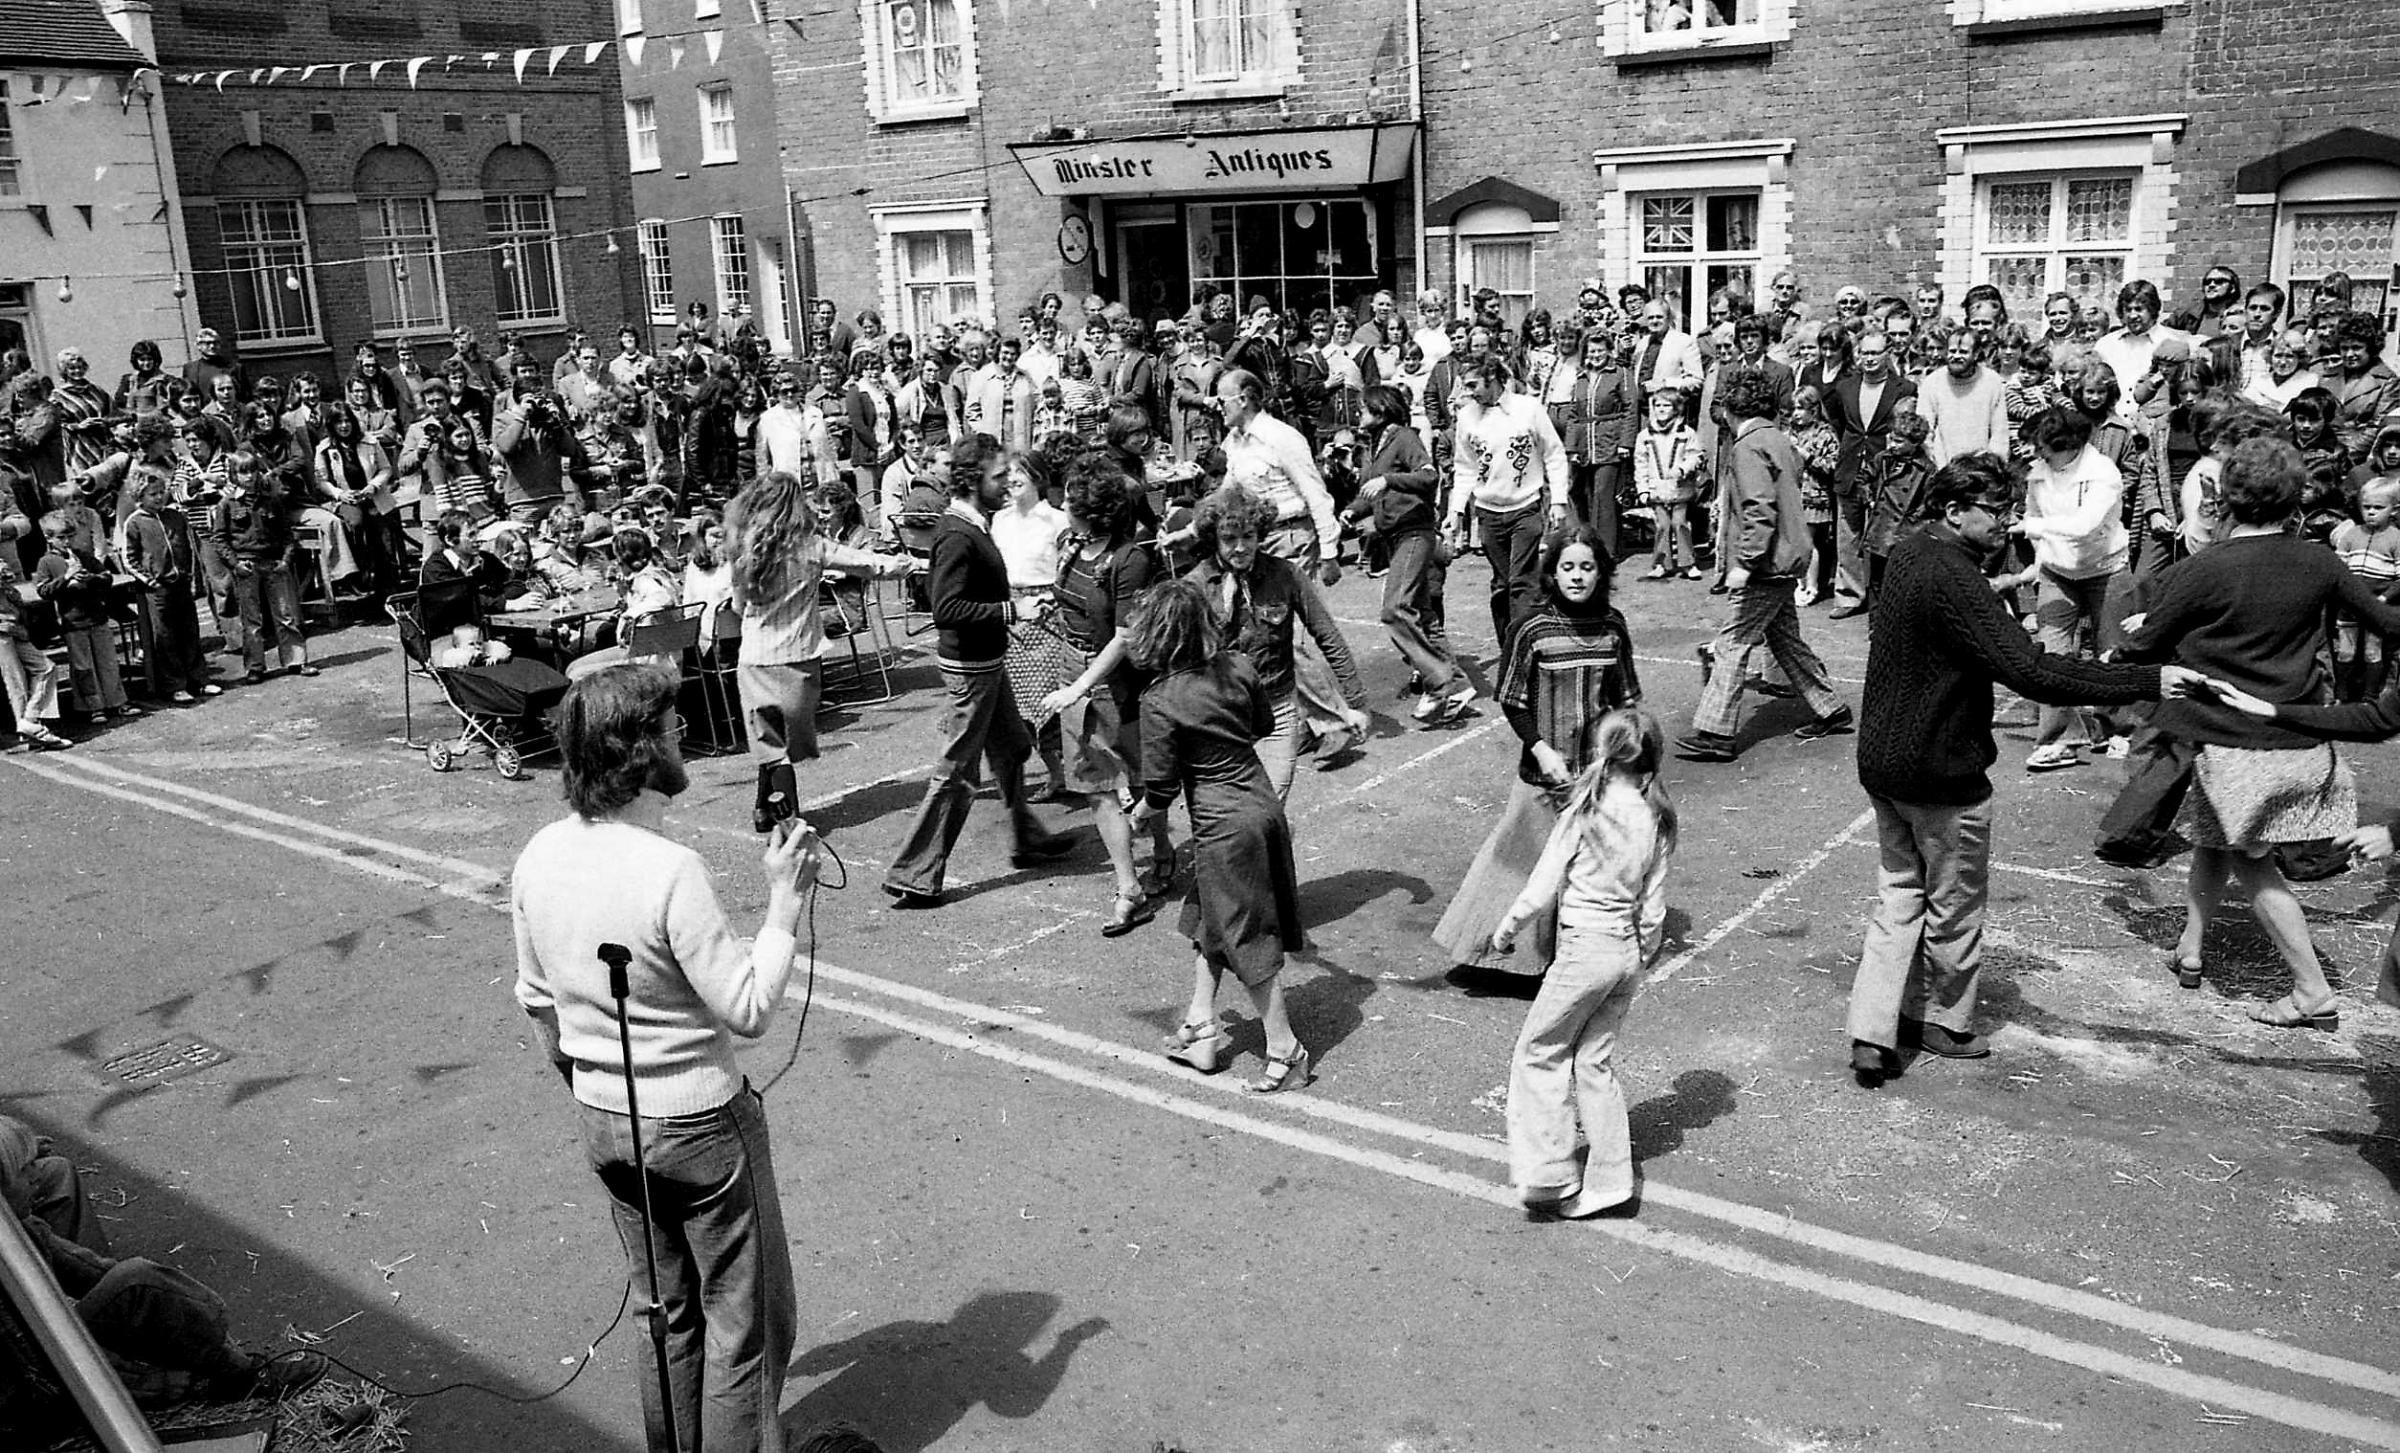 Silver Jubilee Celebrations 1977. Daily Echo Image. Wimborne - dancing near the the Corn exchange.